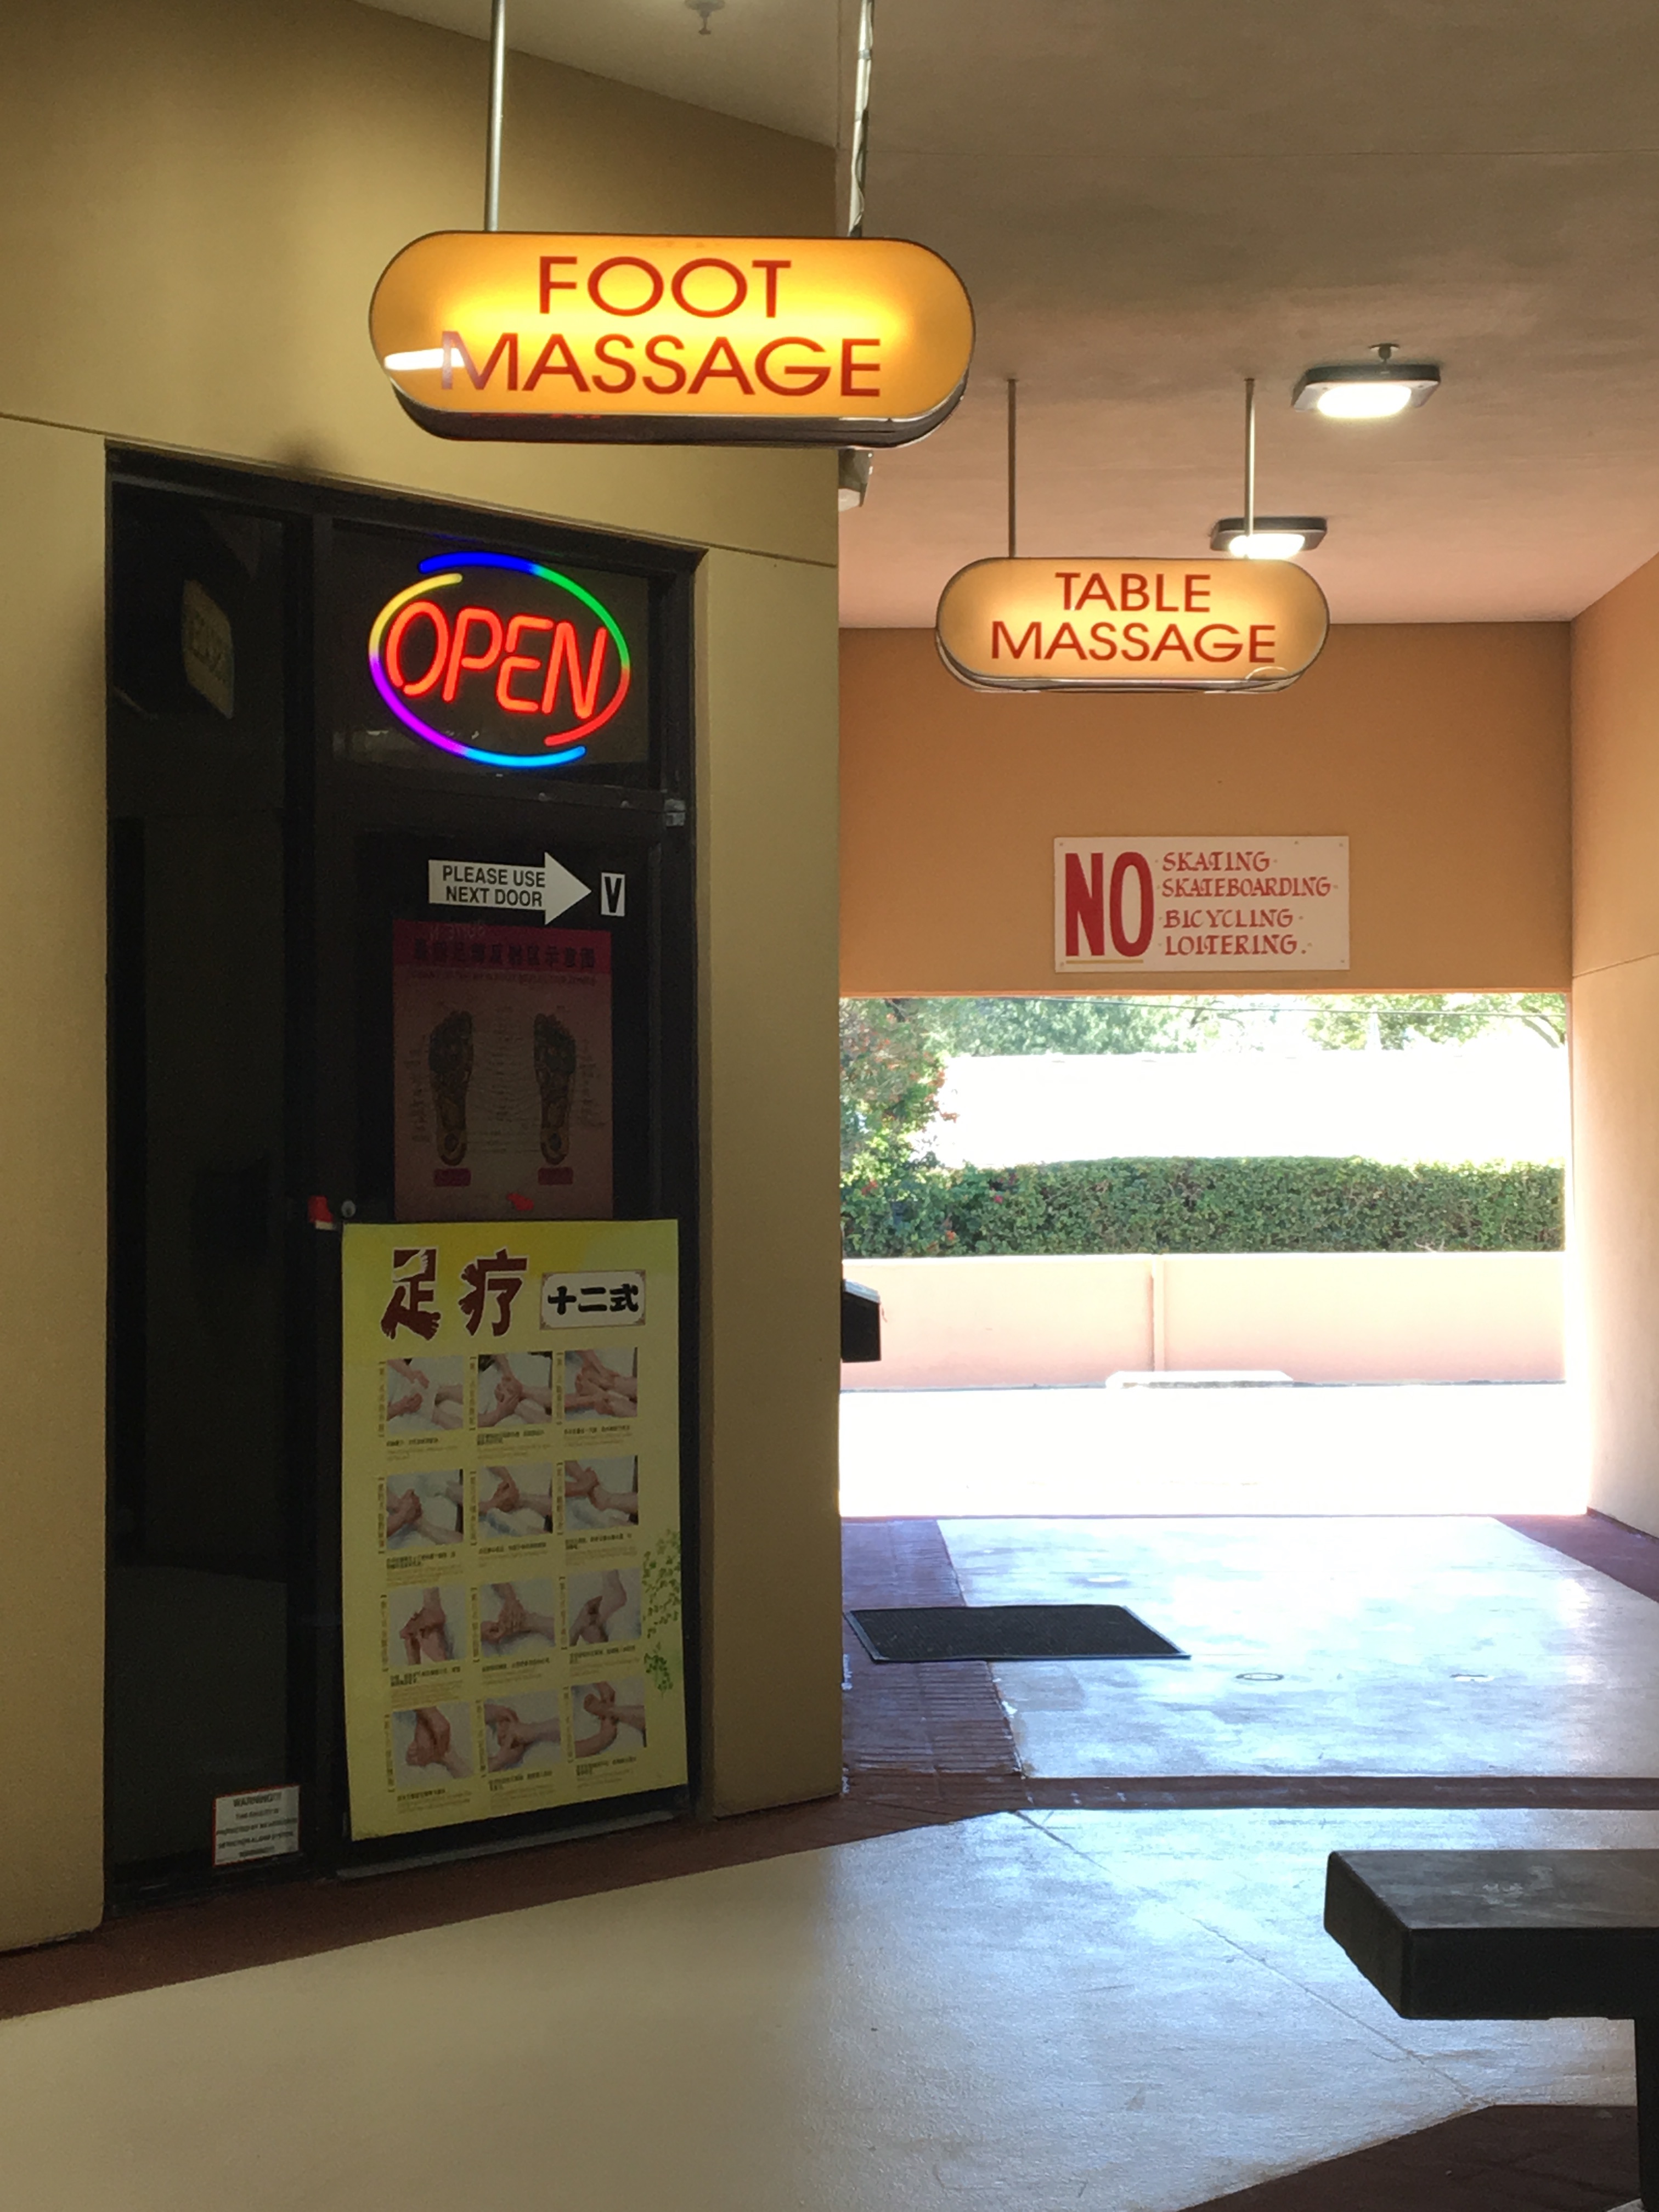 criselda de guzman recommends massage parlour in houston pic